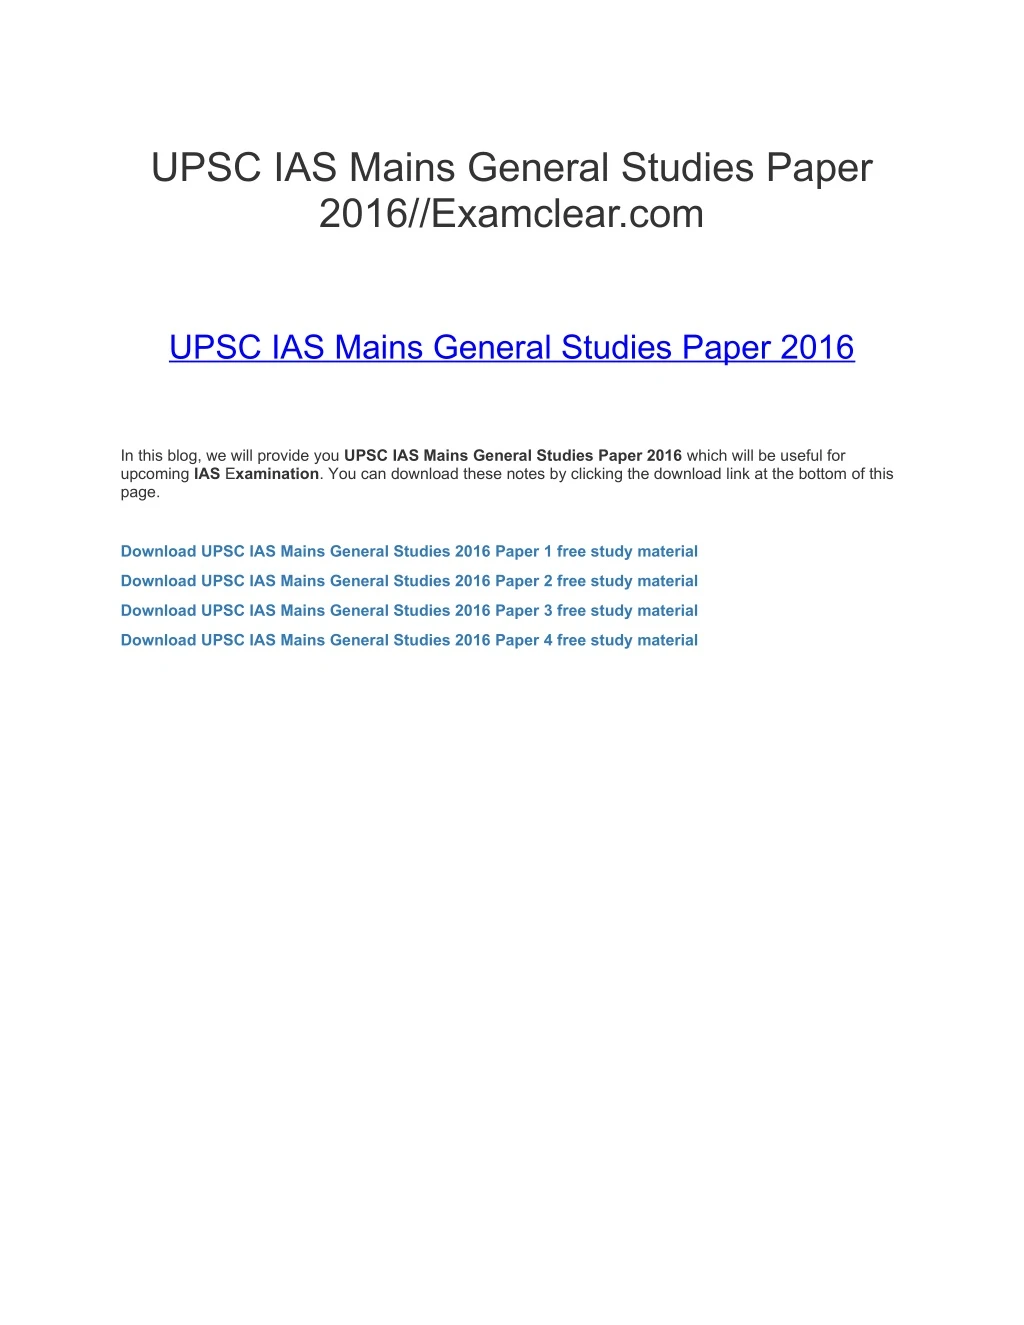 upsc ias mains general studies paper 2016